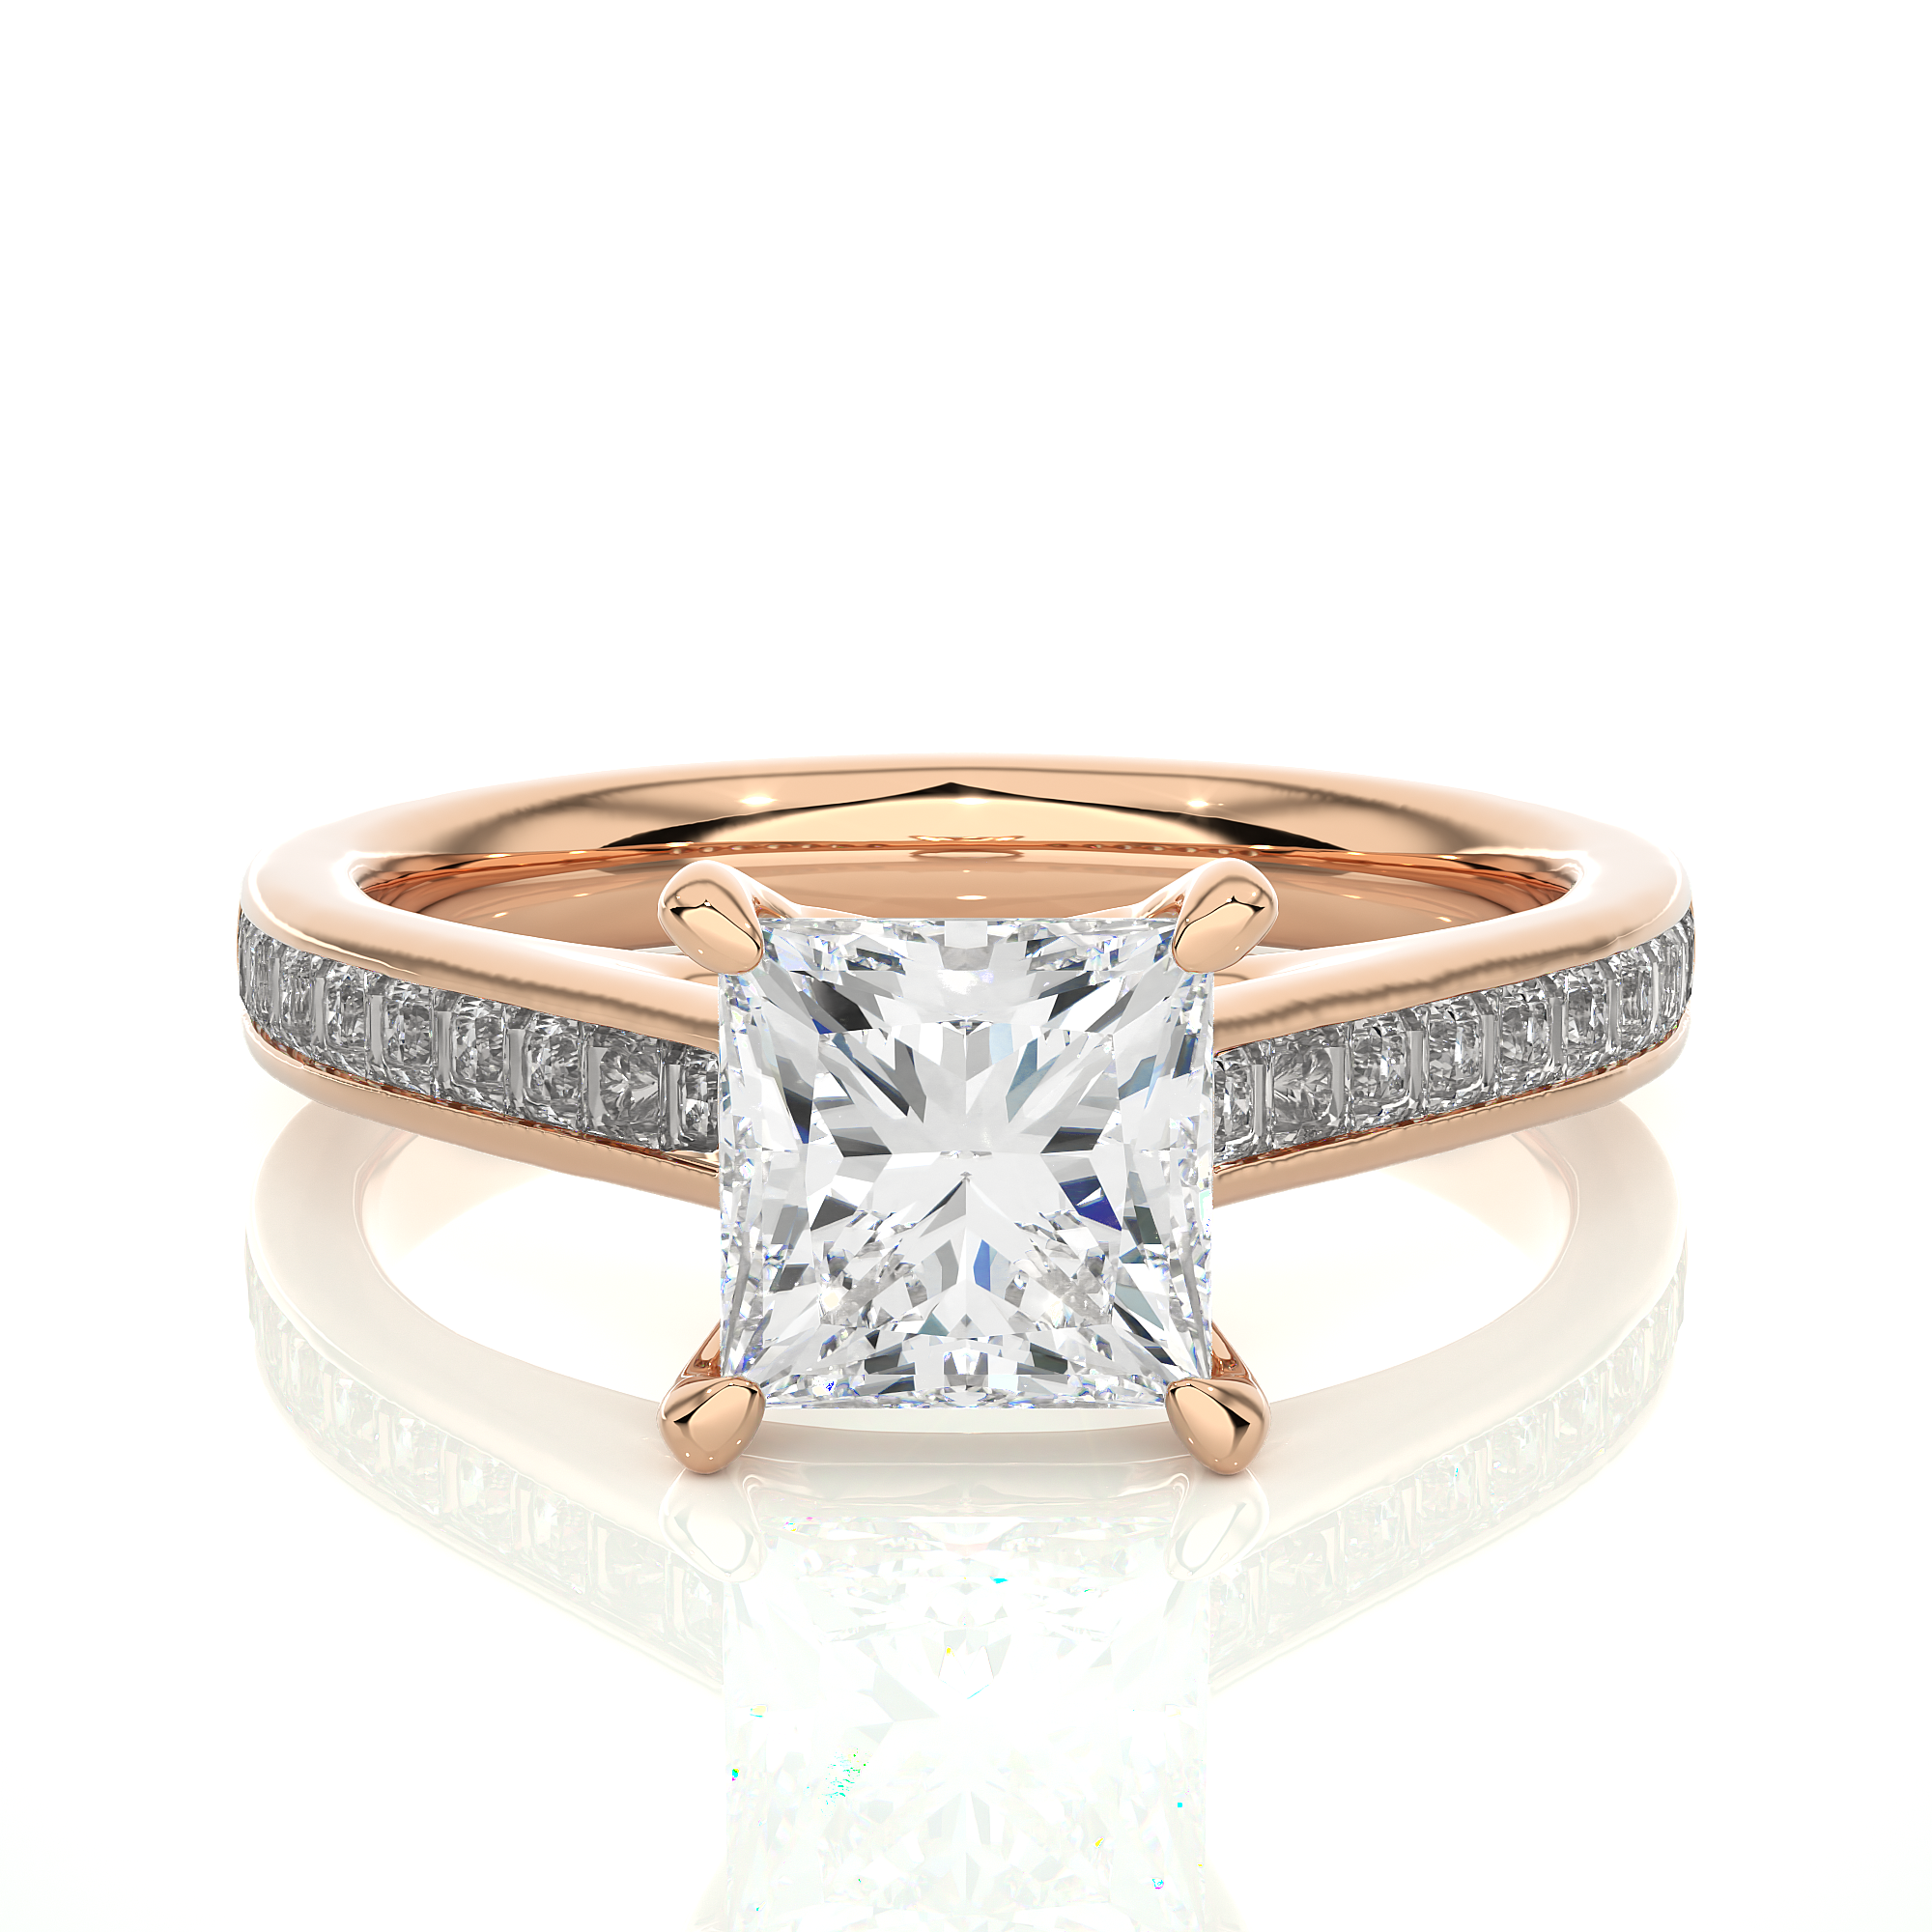 1.95Ct Princess Cut Solitaire Lab Grown Diamond Ring in 14Kt Rose Gold - Blu Diamonds